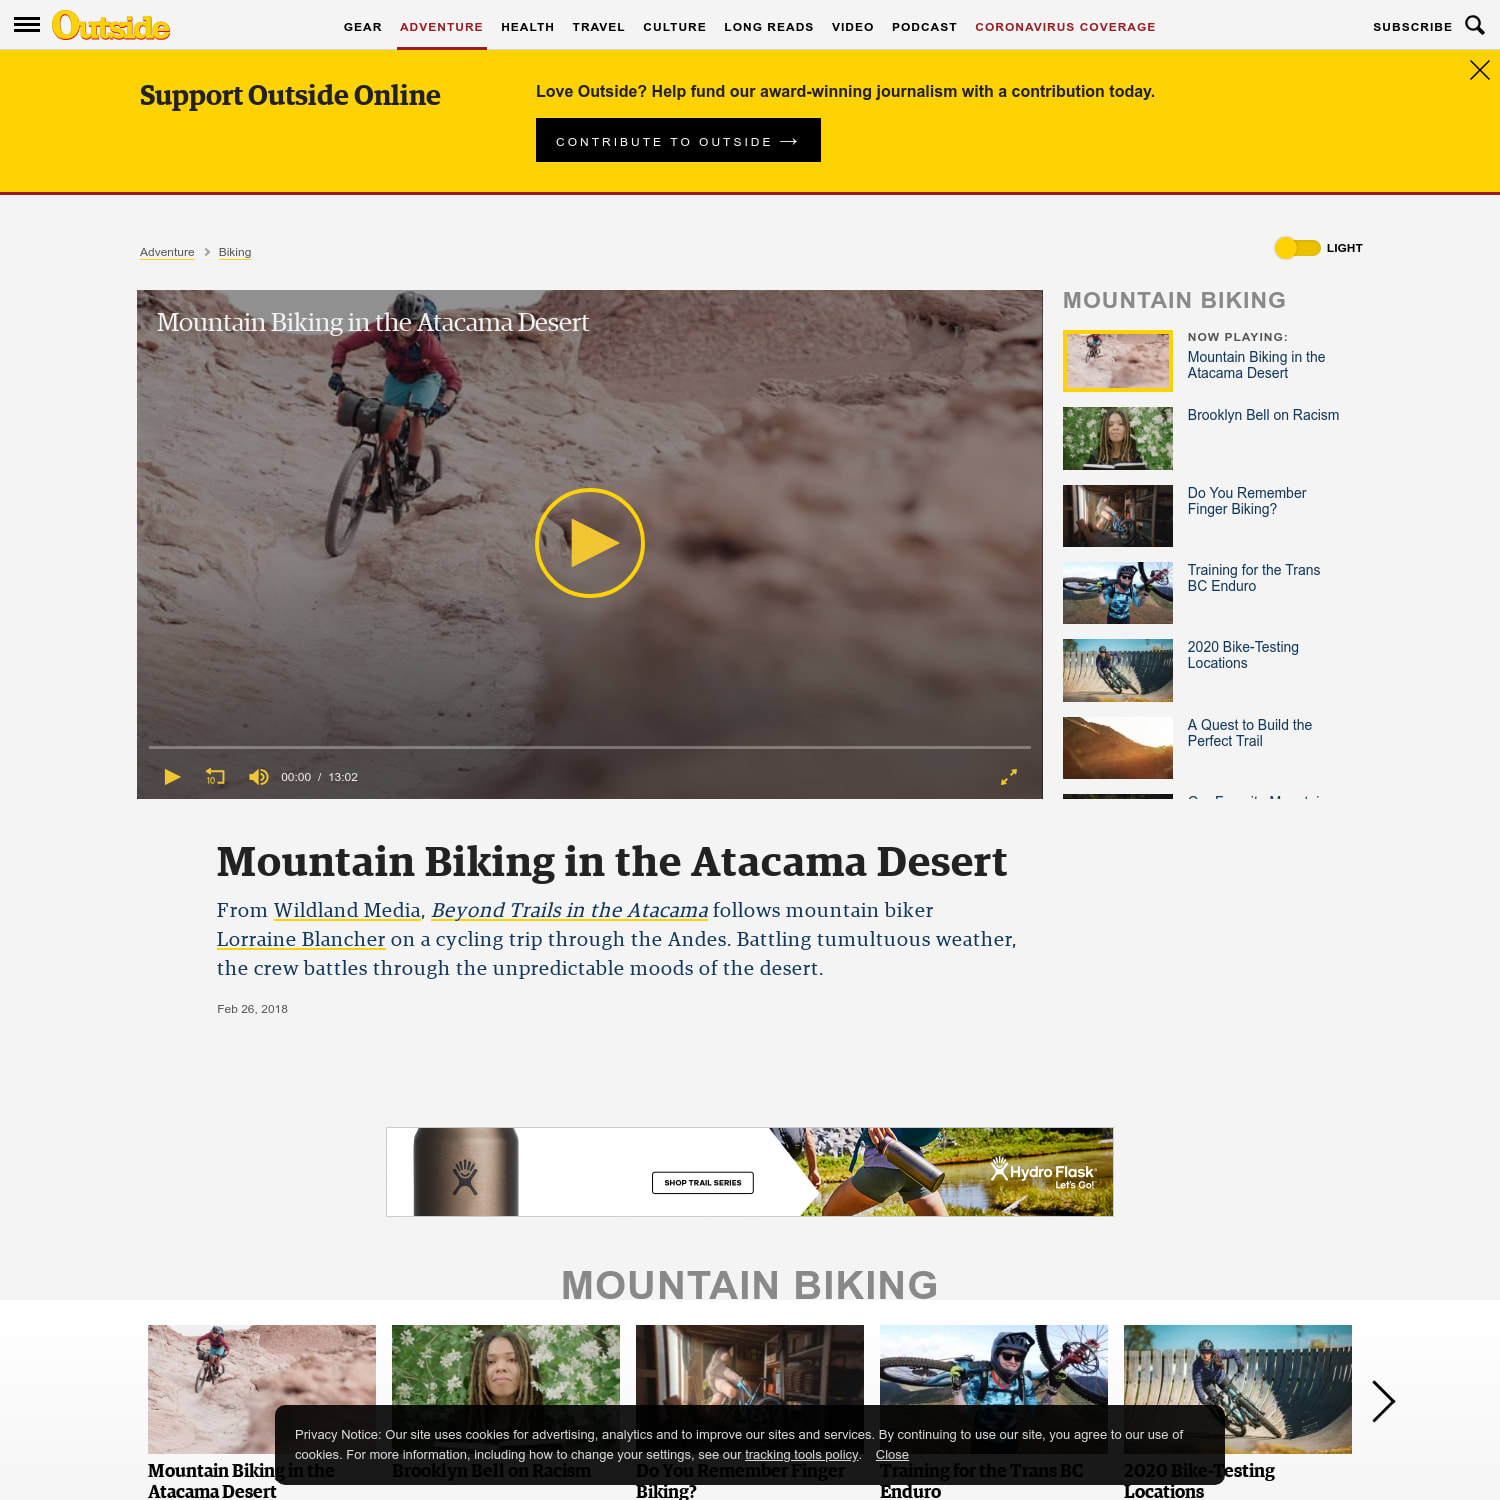 Video: Mountain Biking in the Atacama Desert